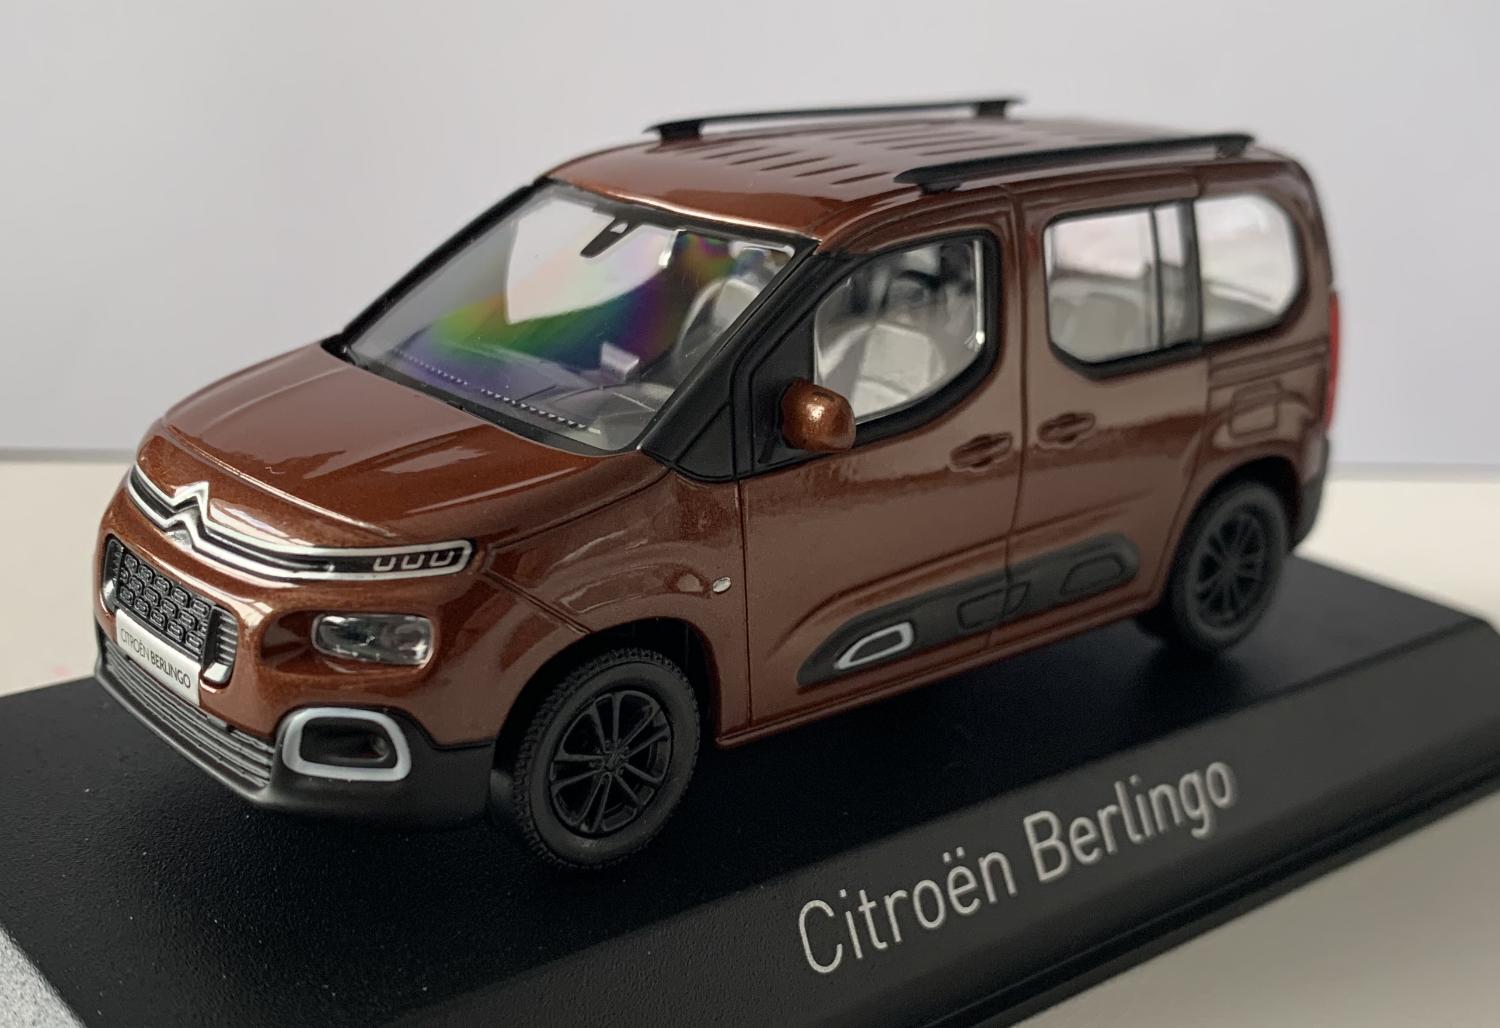 Citroen Berlingo 2020 in metallic copper 1:43 scale model from Norev, 155765